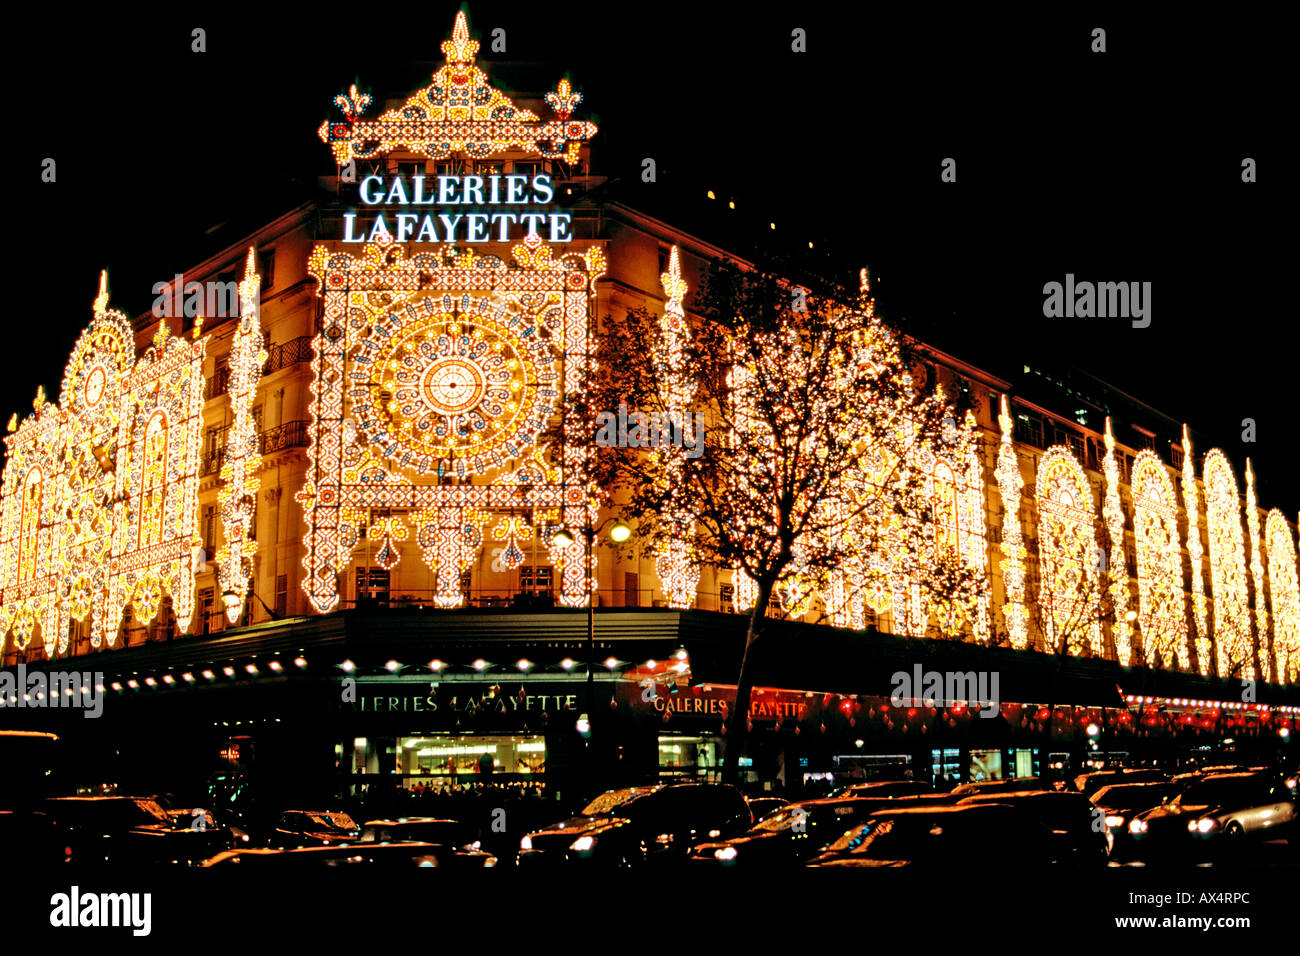 Exterior of the Galeries Lafayette department store in Paris